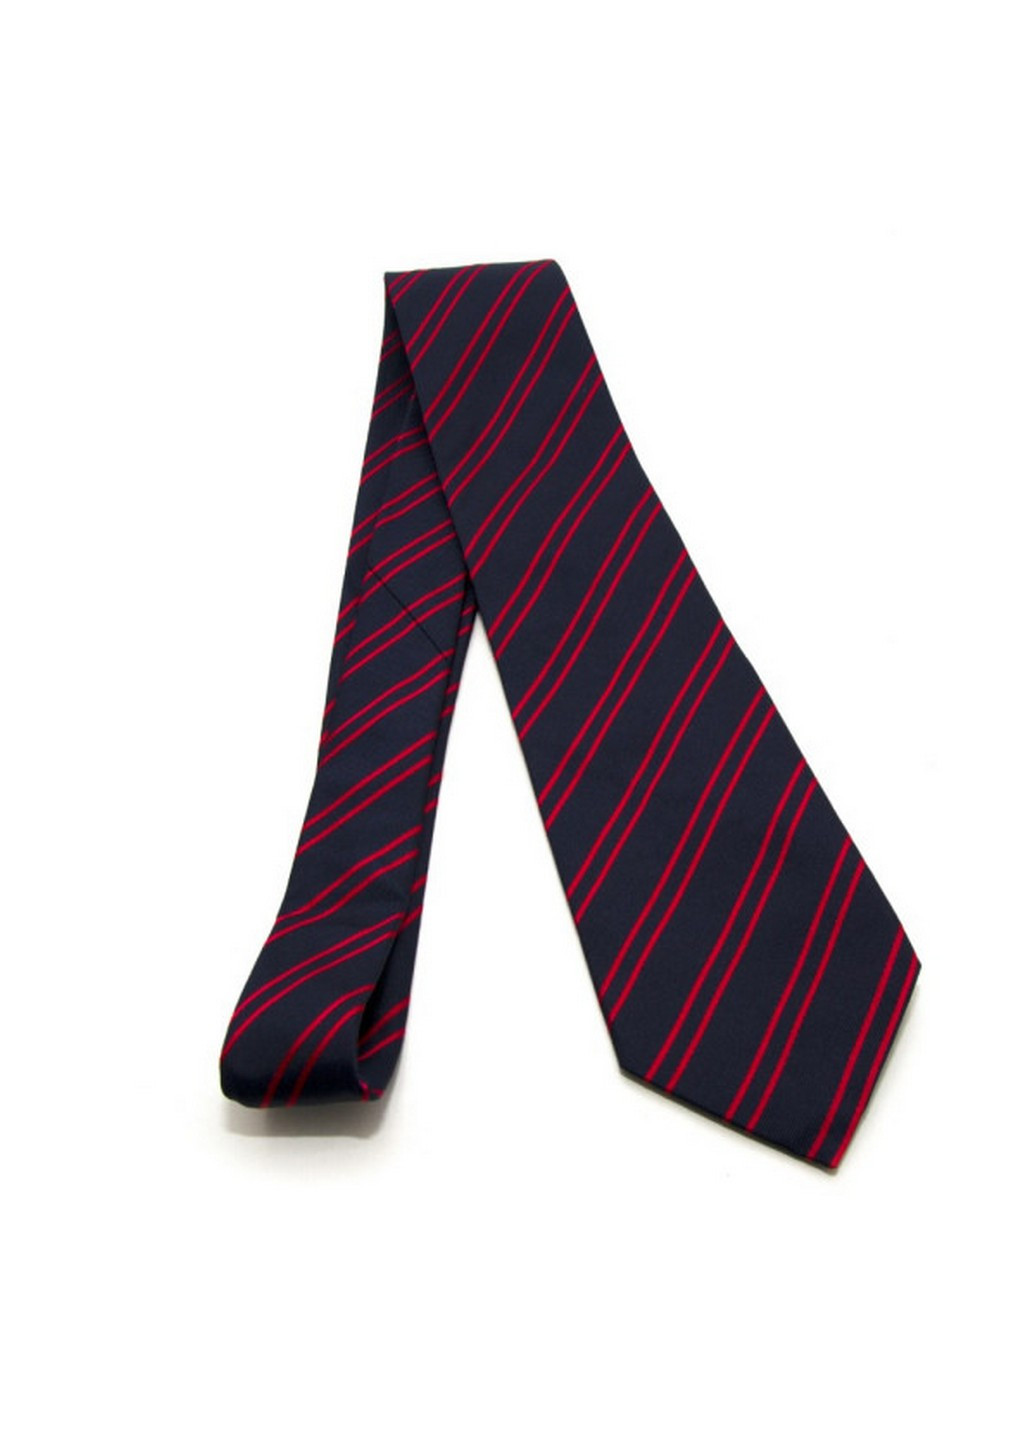 Краватка з червоними смужками 8,5 см Emilio Corali (259206133)